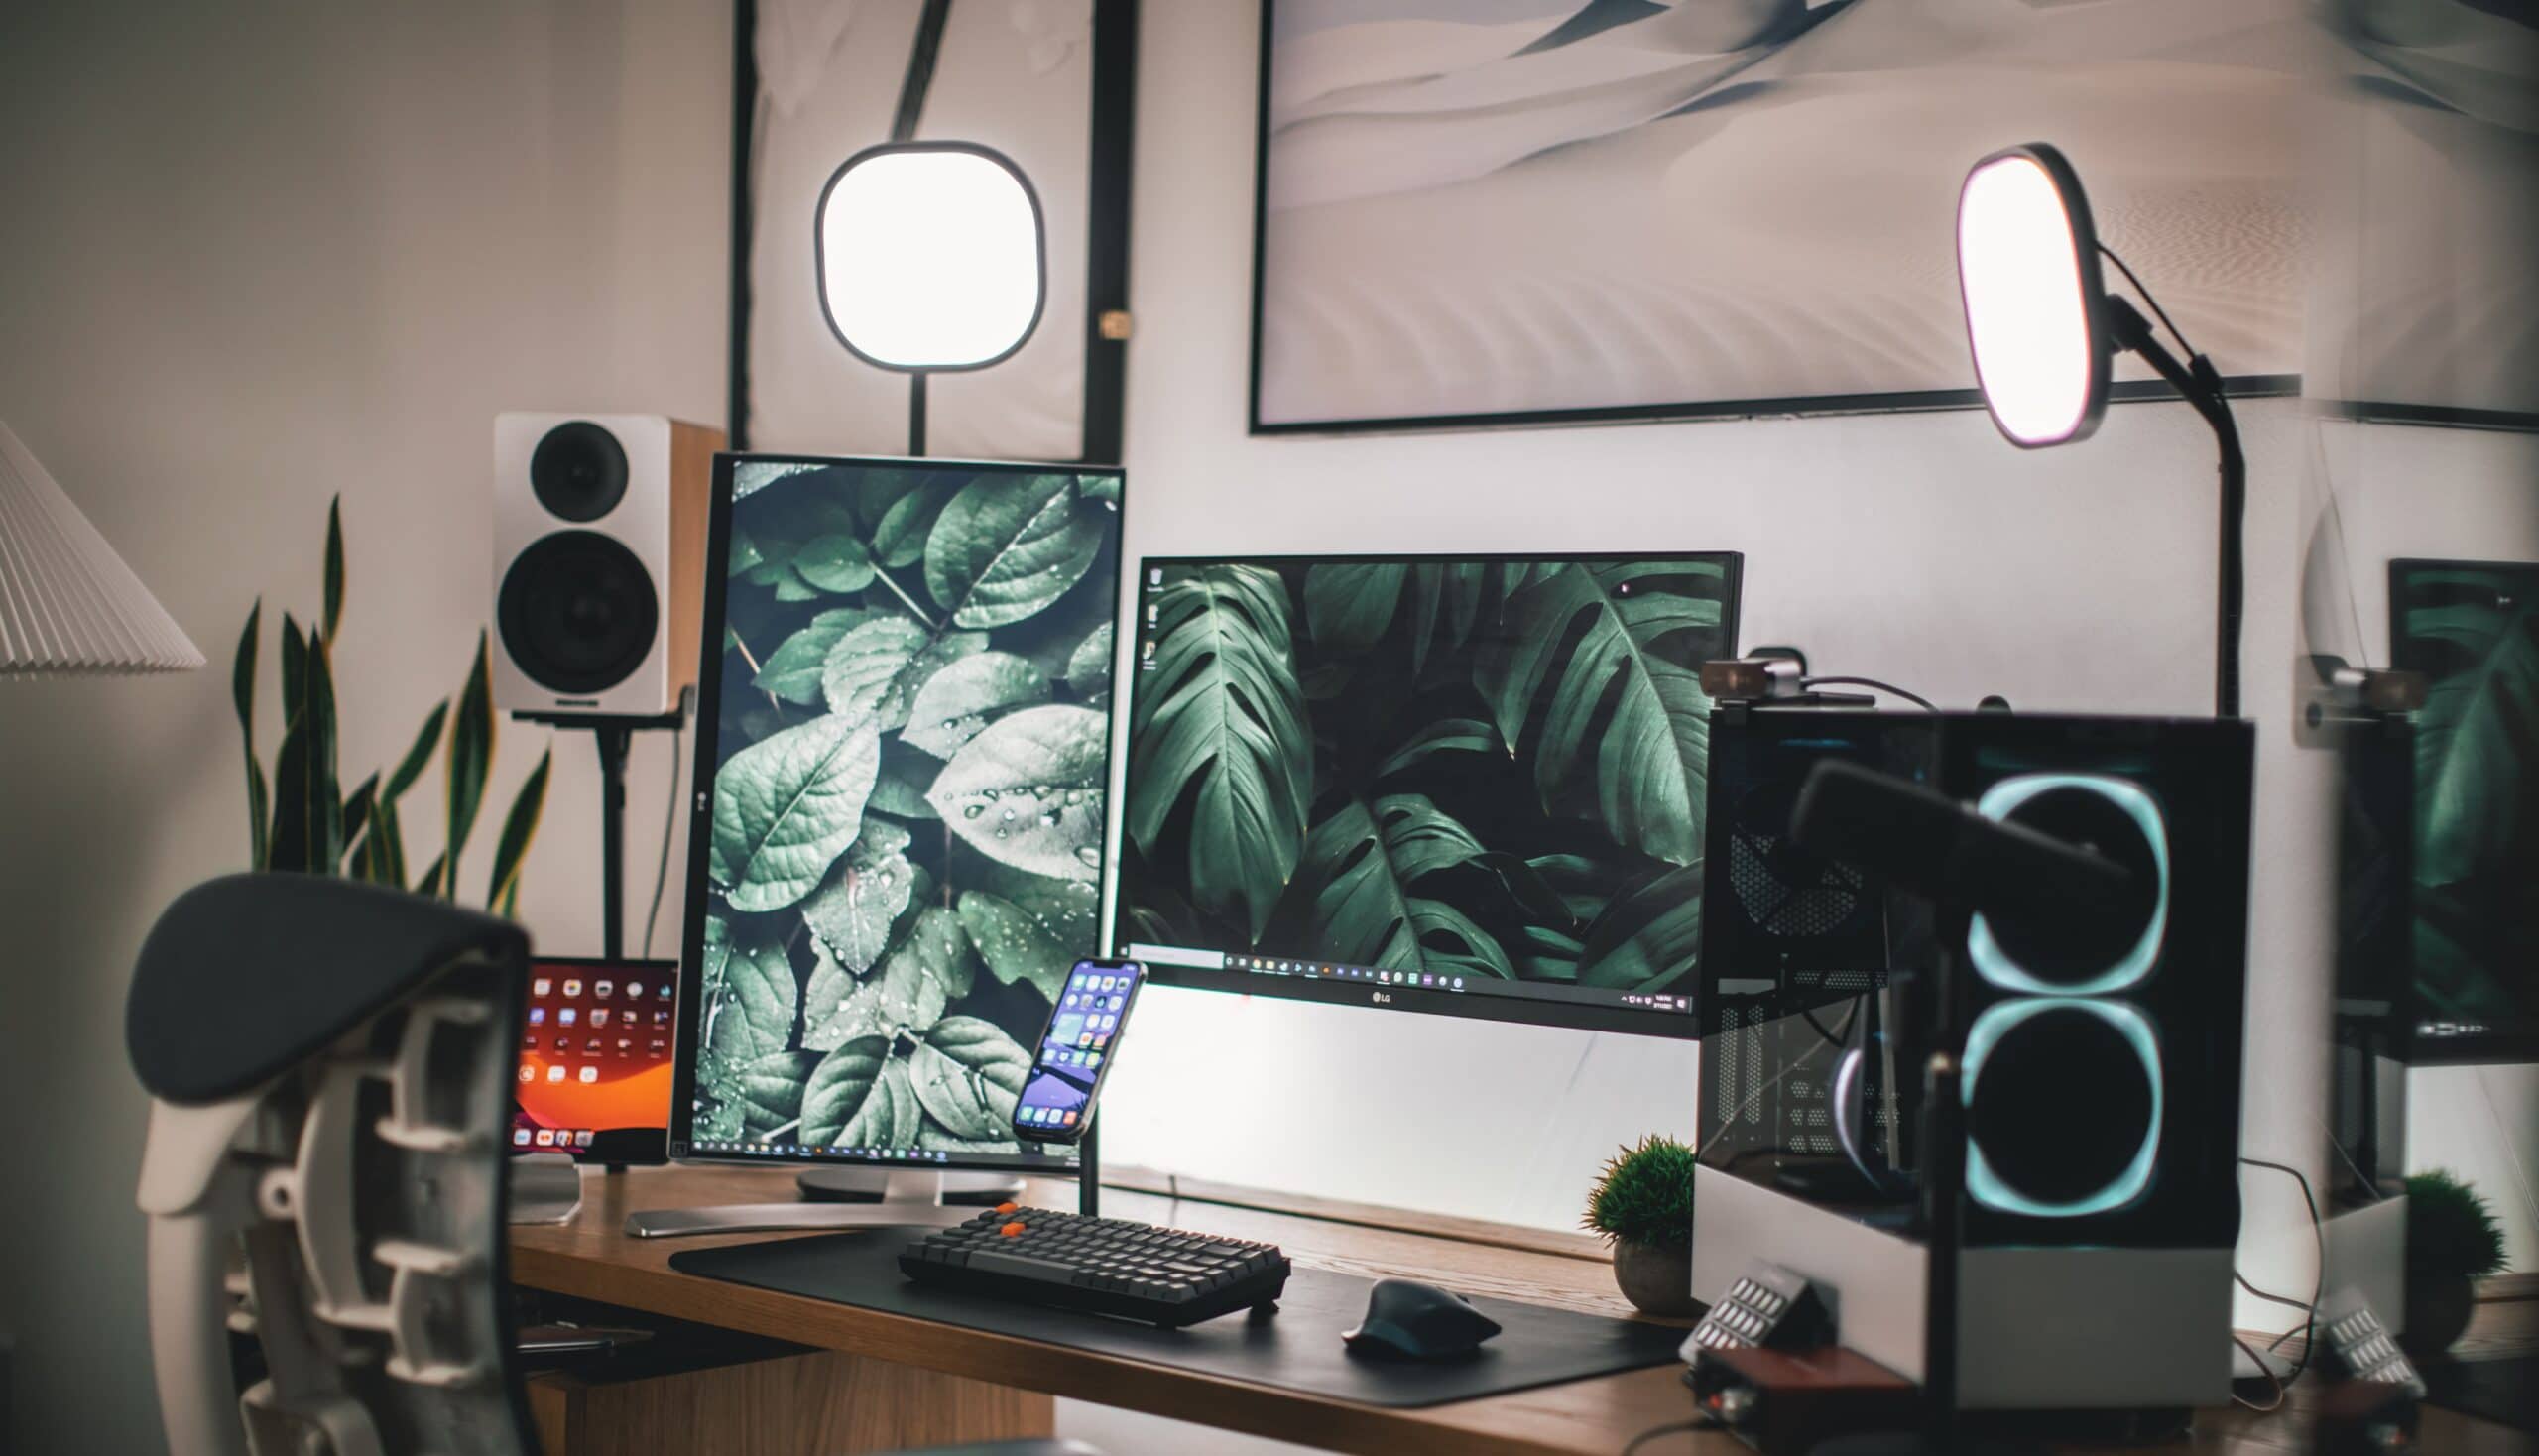 Robert Nickson office PC setup with Elgato streaming lights